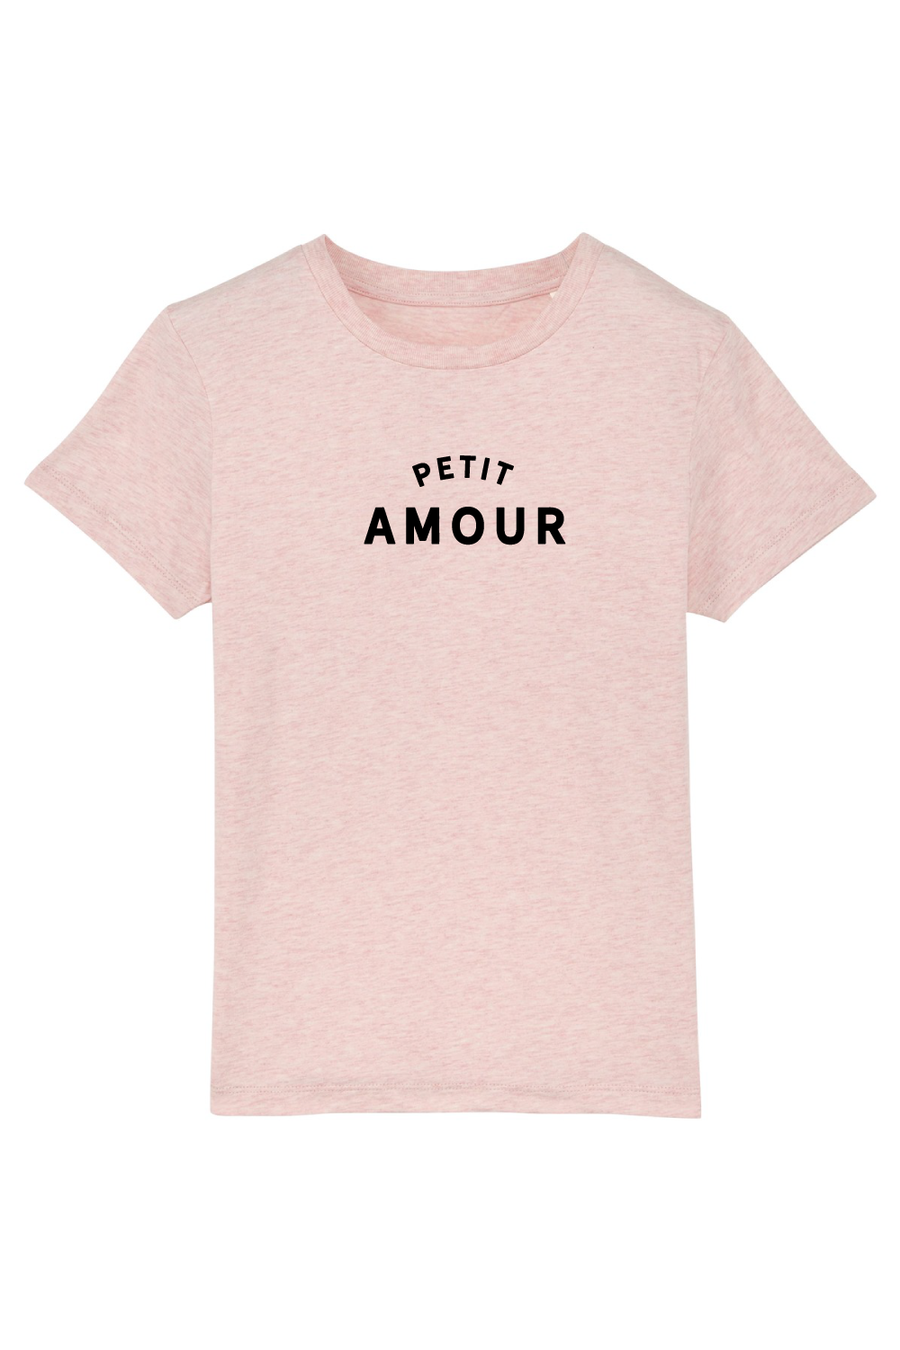 Petit amour kids - Joh Clothing